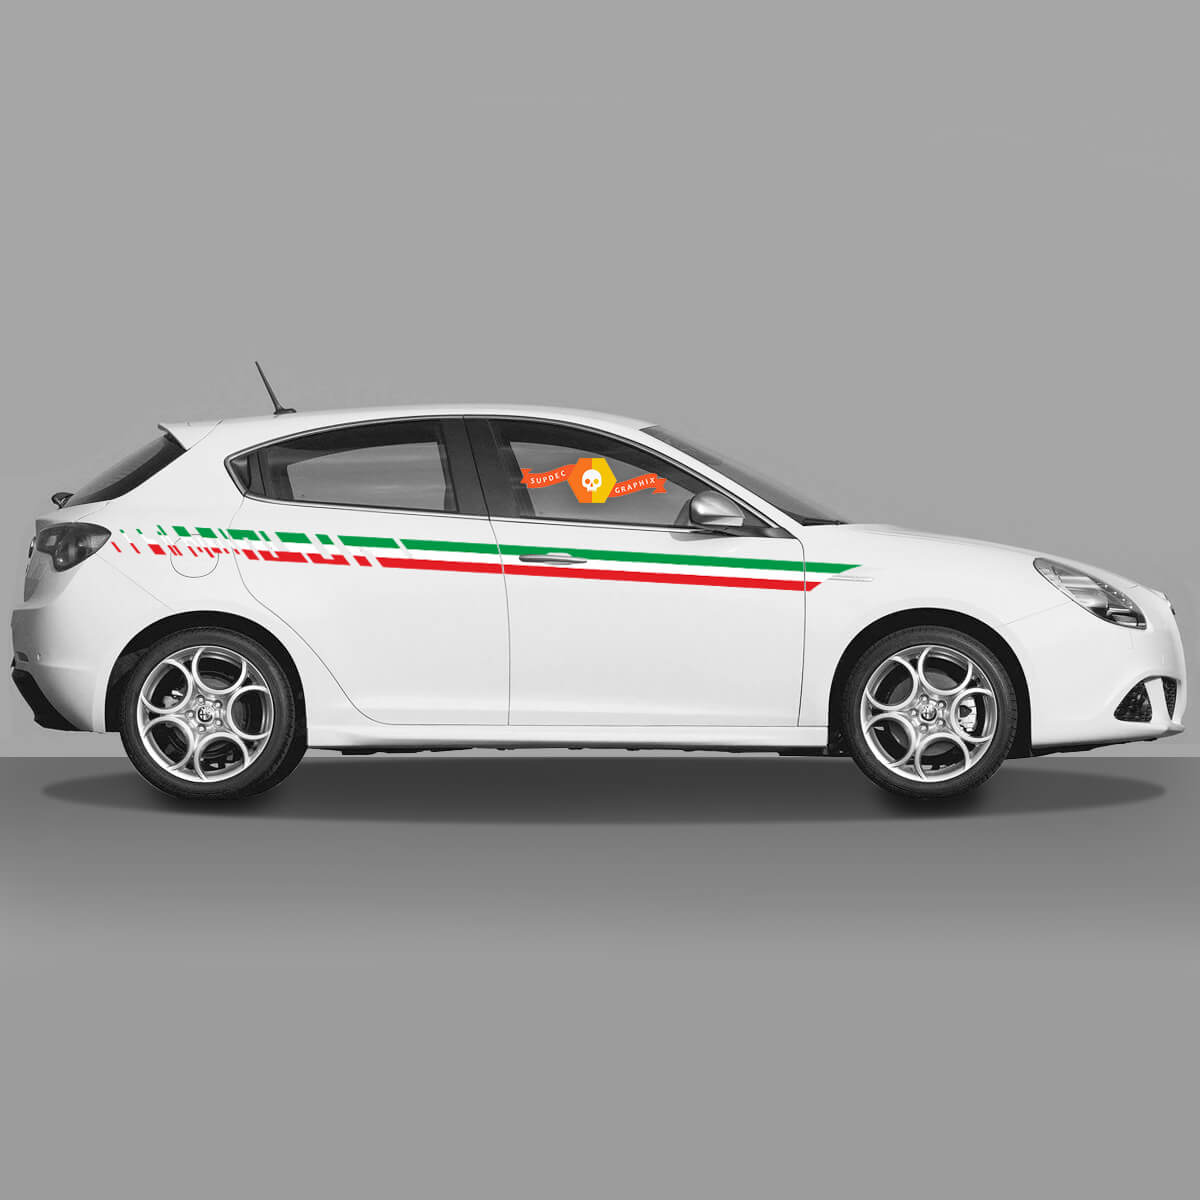 2x Doors Body Decal fits Alfa Romeo Giulietta decals Vinyl Graphics,  Plain Linear Italian Flag